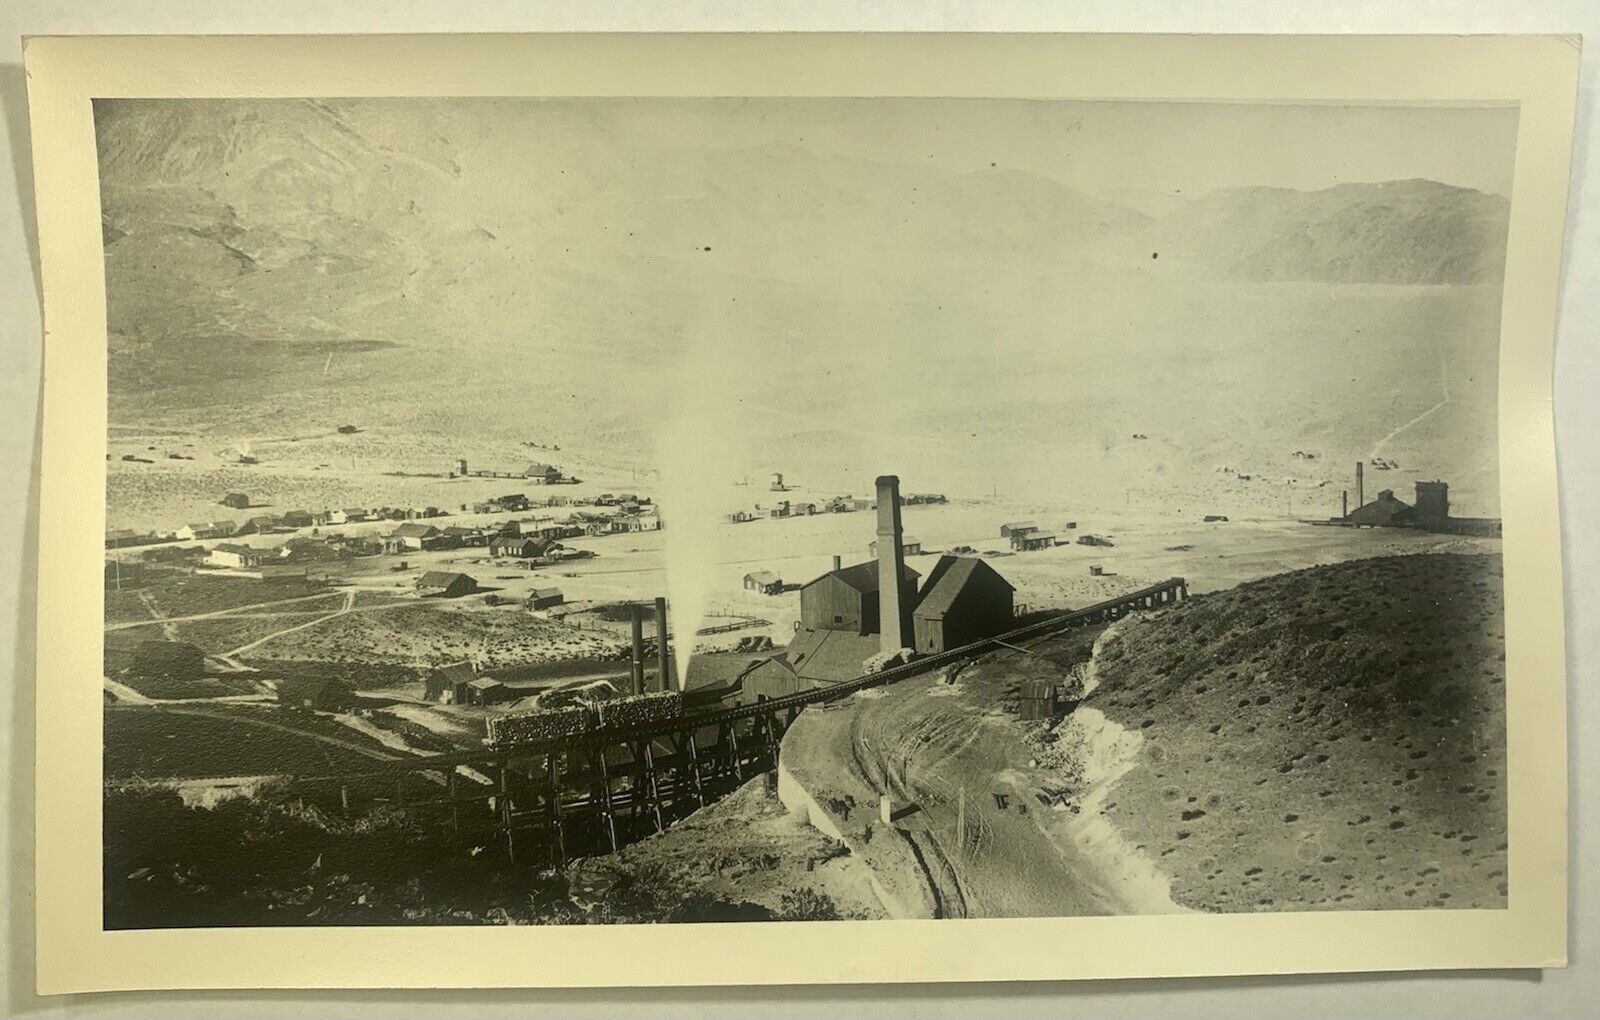 Belleville Historic Nevada Mining Western Train Tracks Factory 1880s Photograph